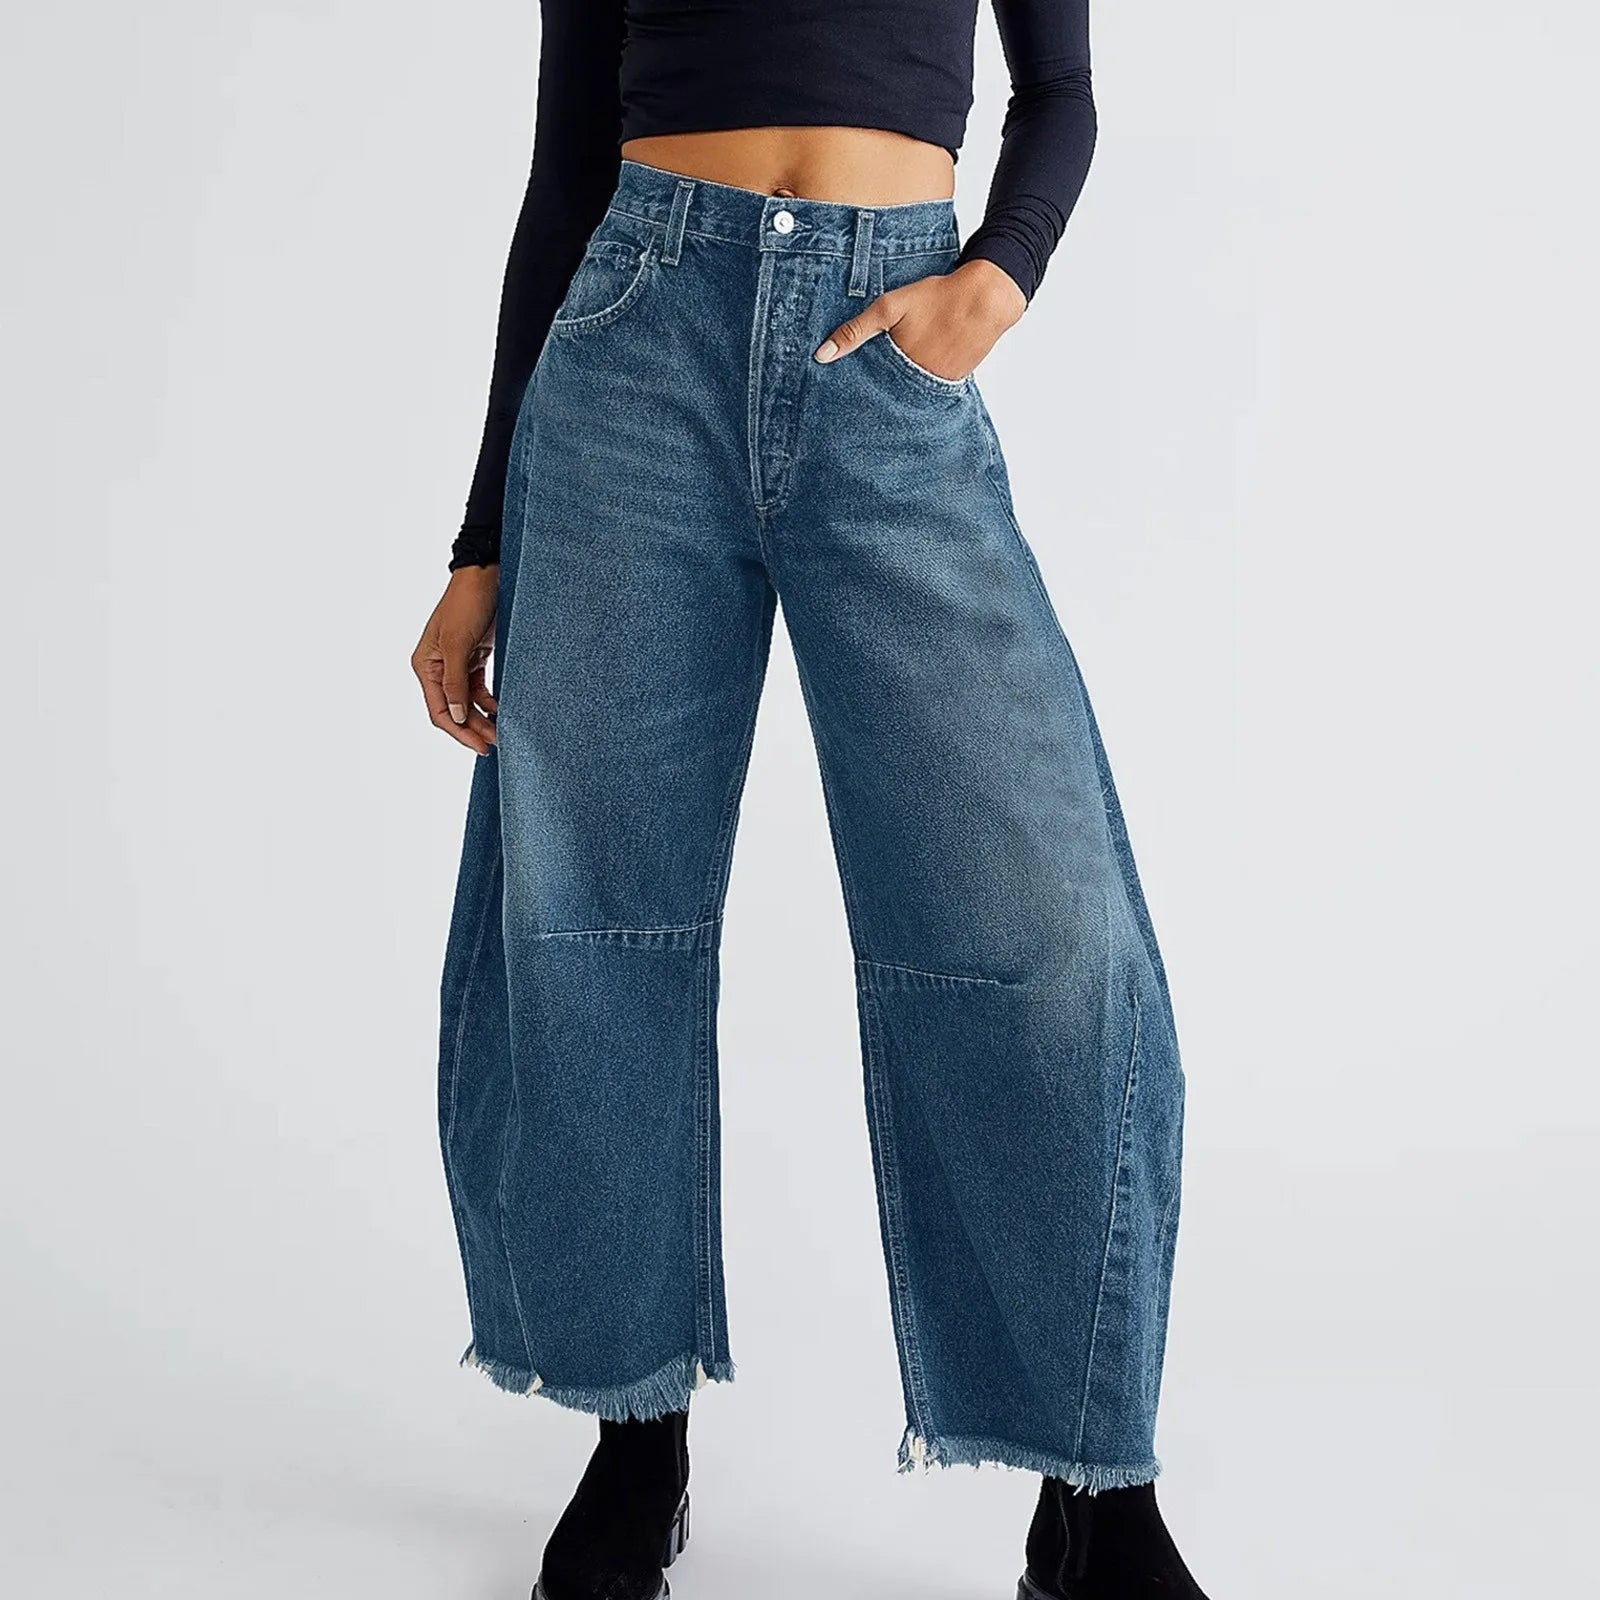 Olivia Klein Effortless Edge Jeans